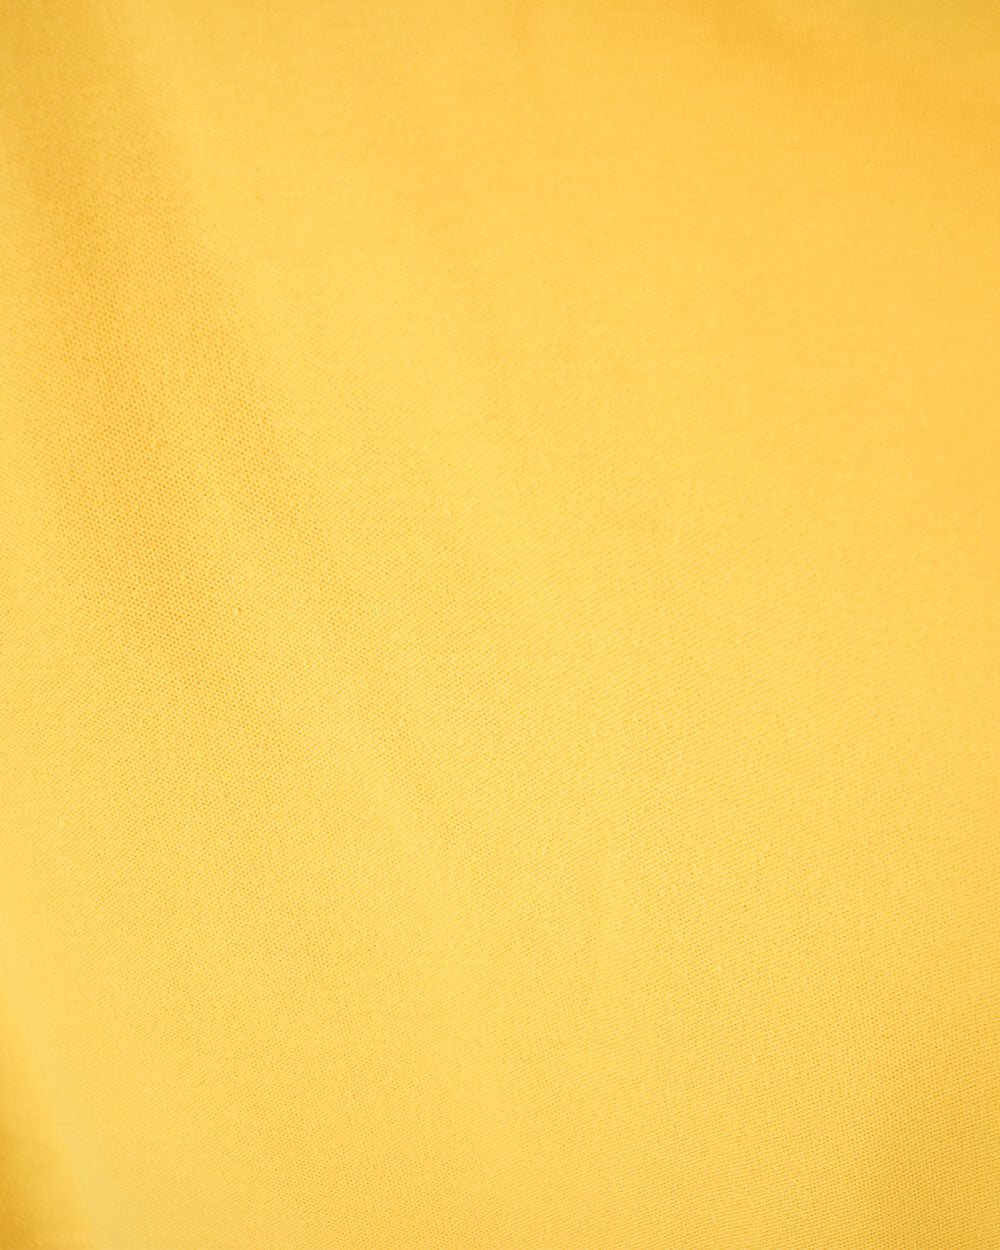 Yellow Fila Polo Shirt - XX-Large